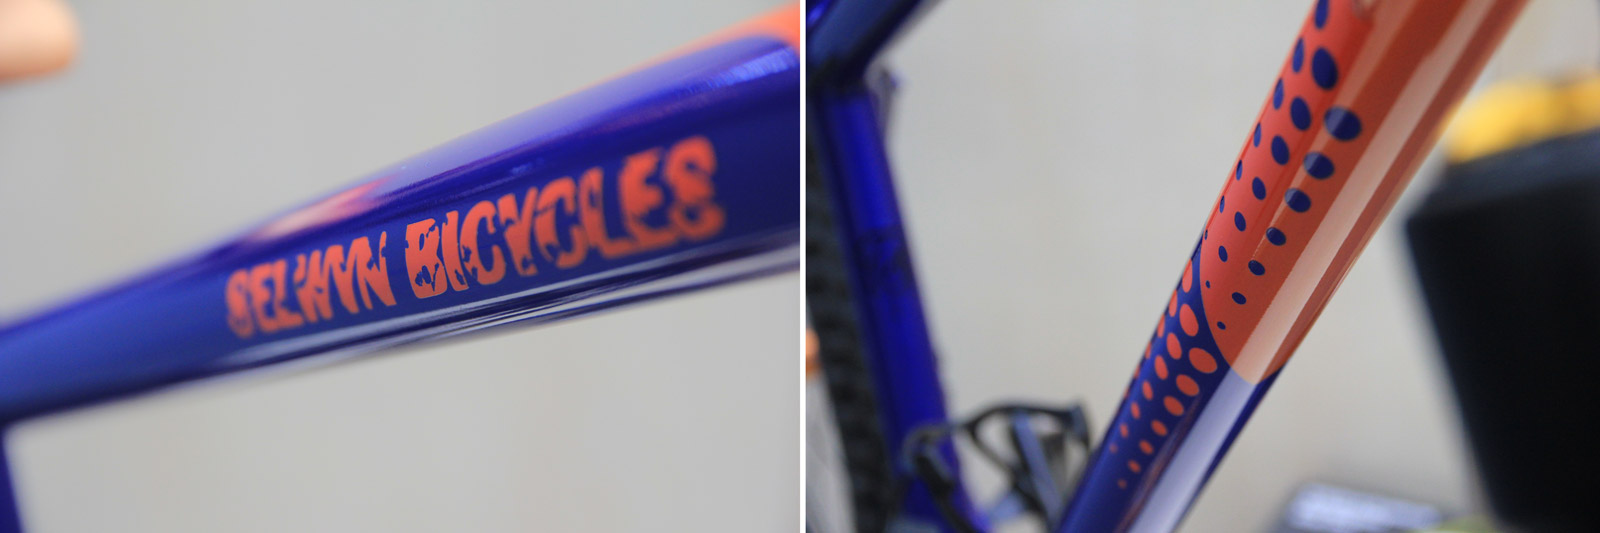 selwyn bicycles steel hardtail mtb frame paint